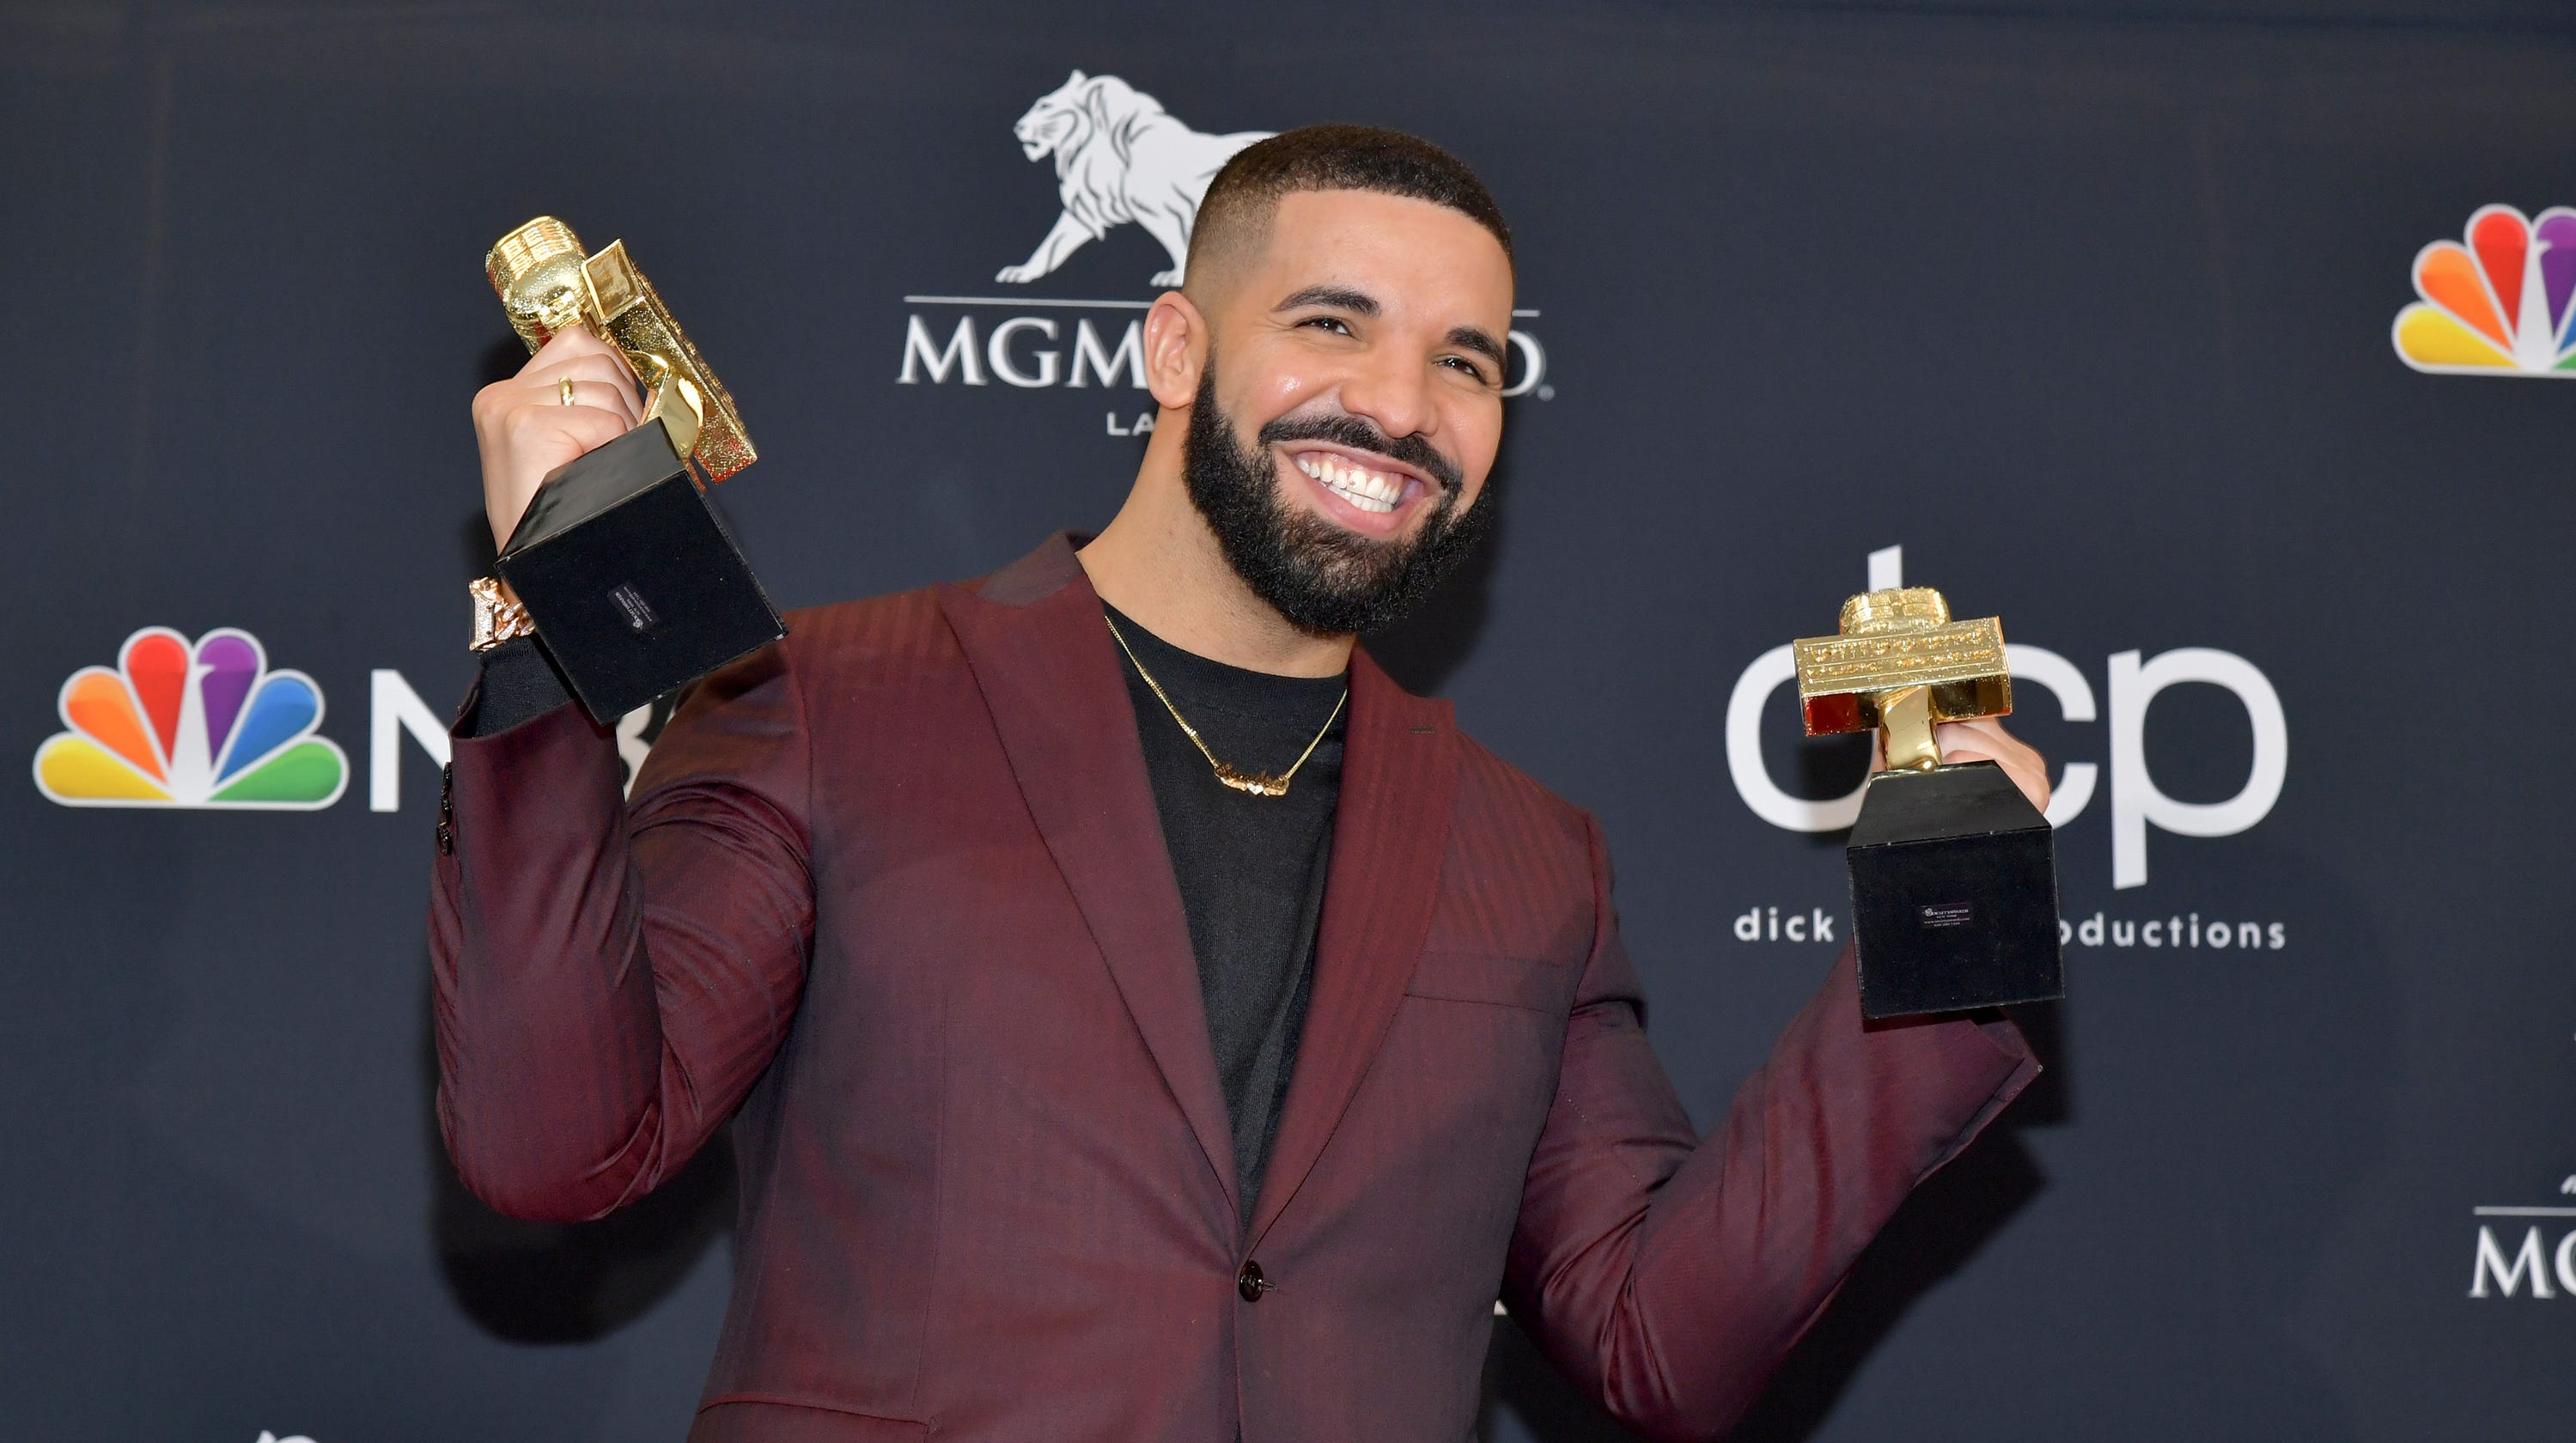 Billboard Music Awards 2019: Drake has huge night, wins top artist